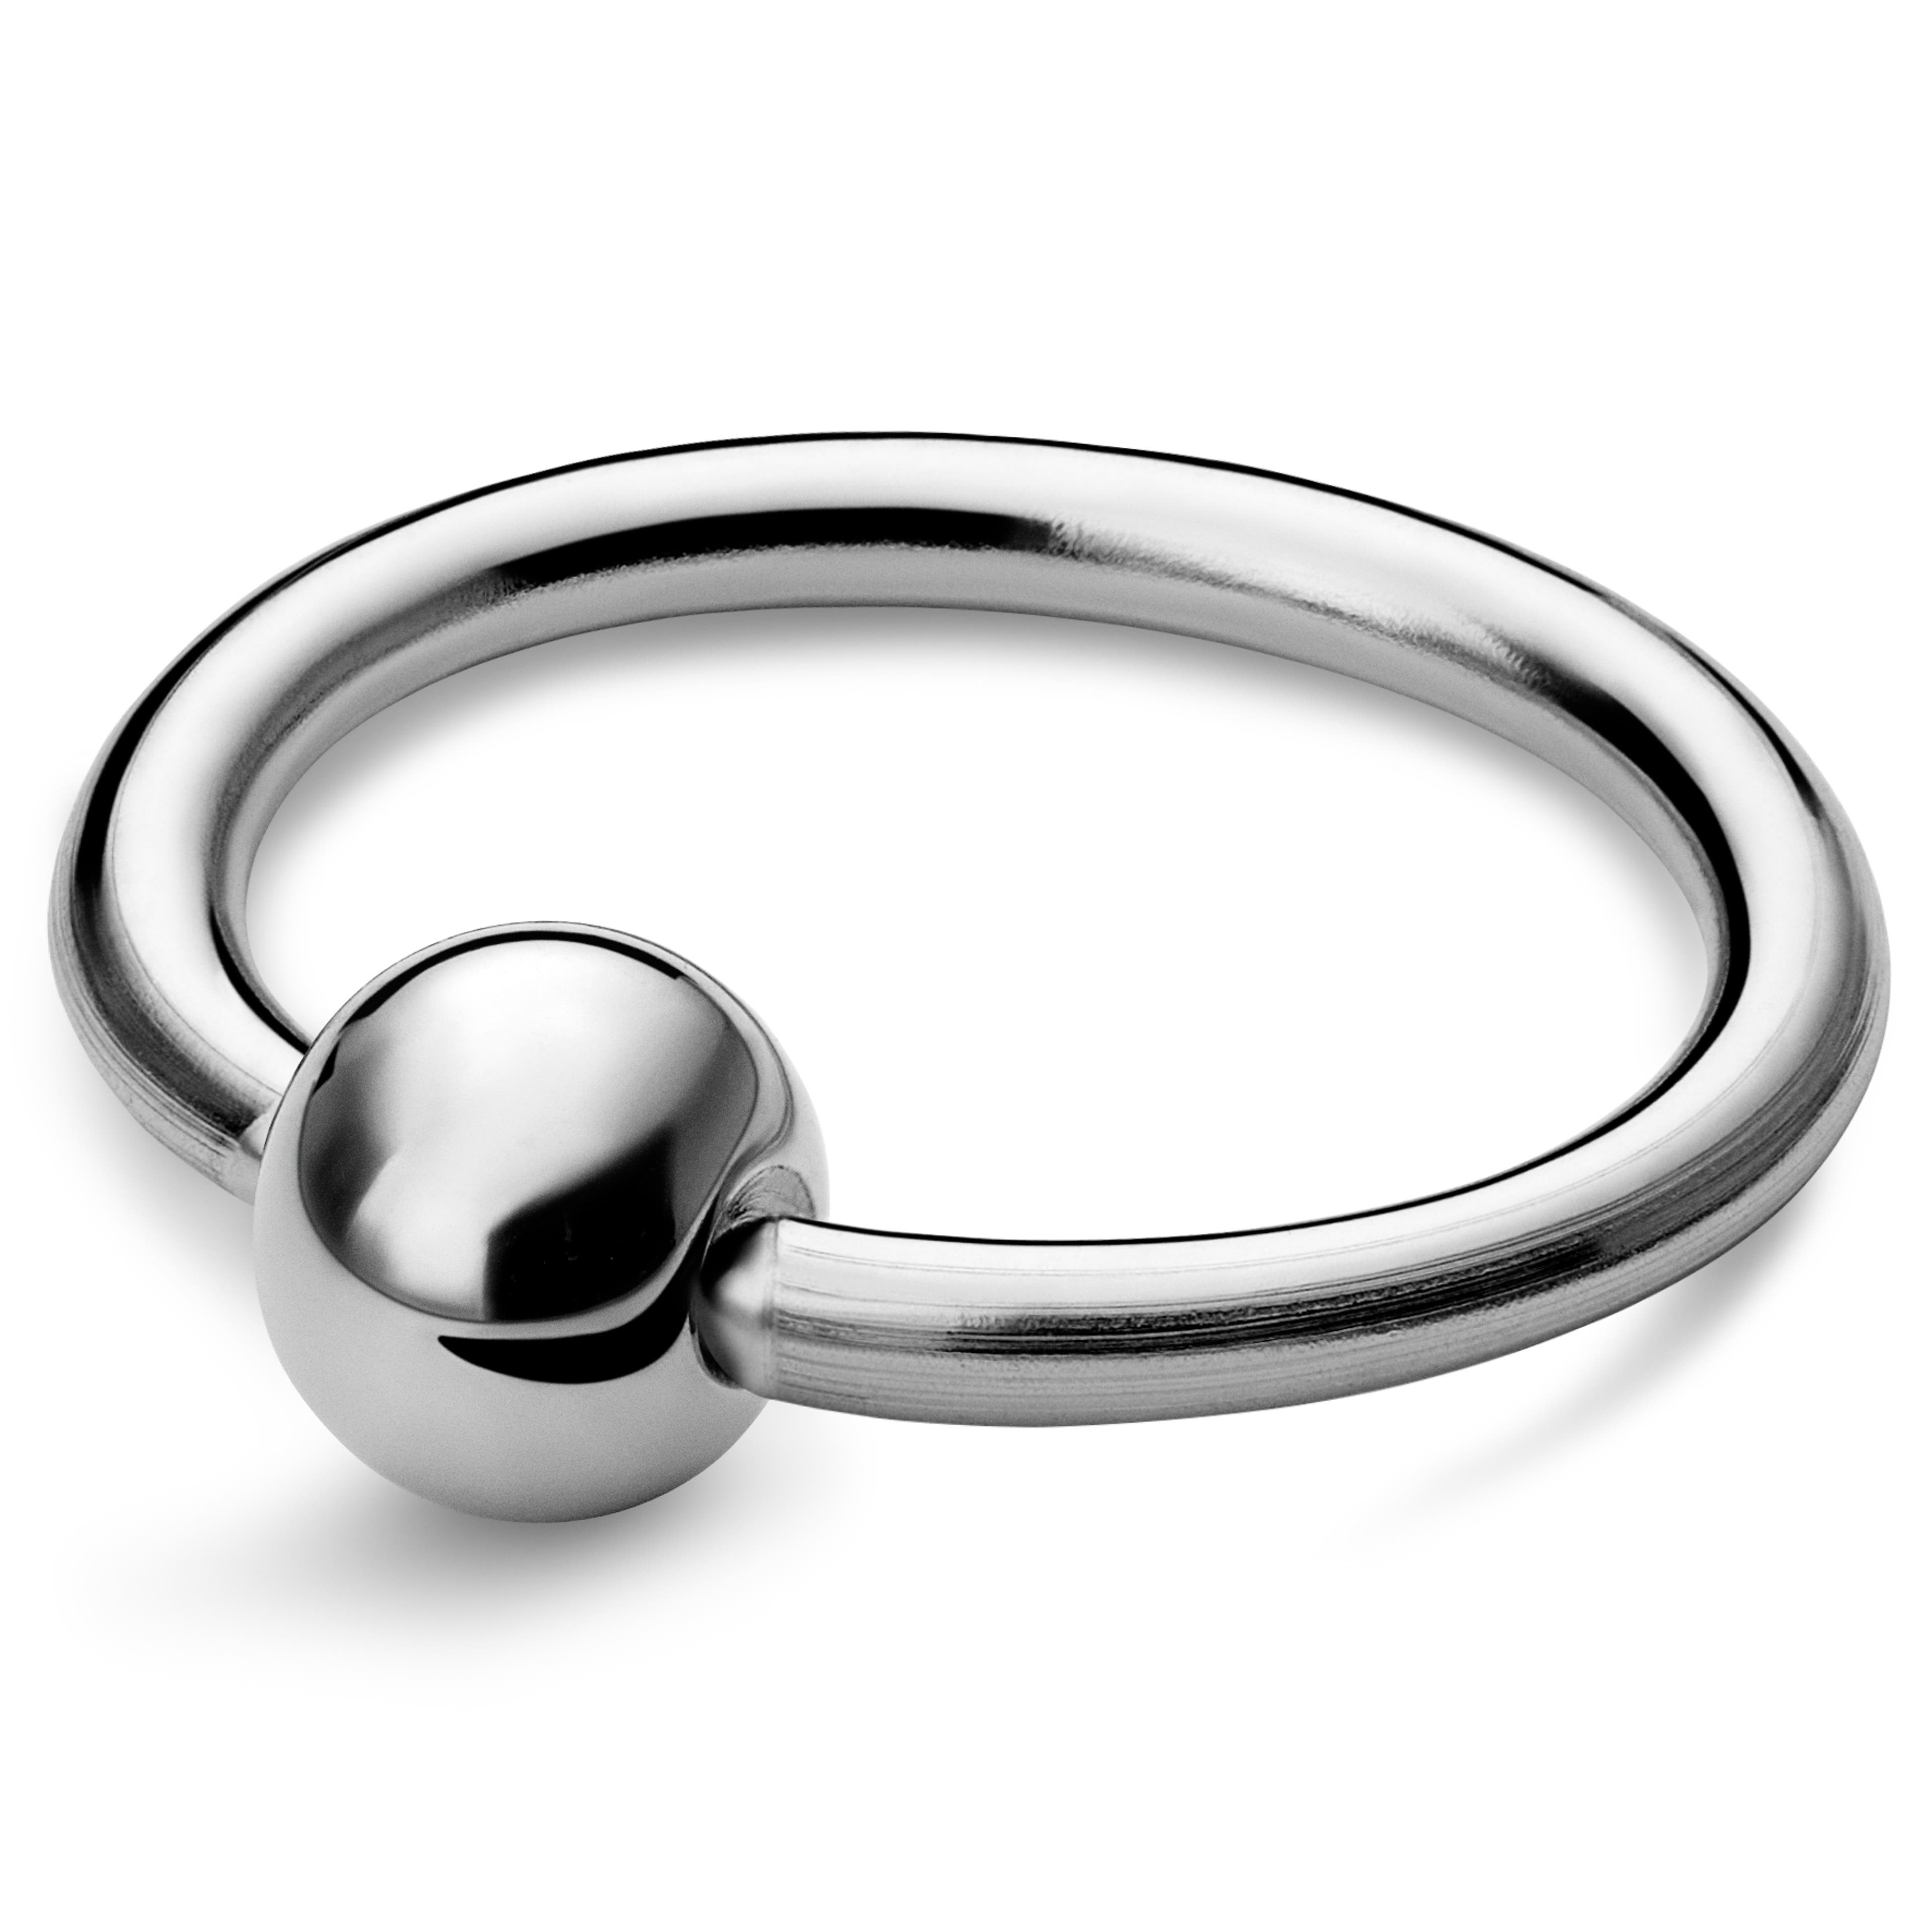 Captive bead ring da 8 mm in titanio color argento